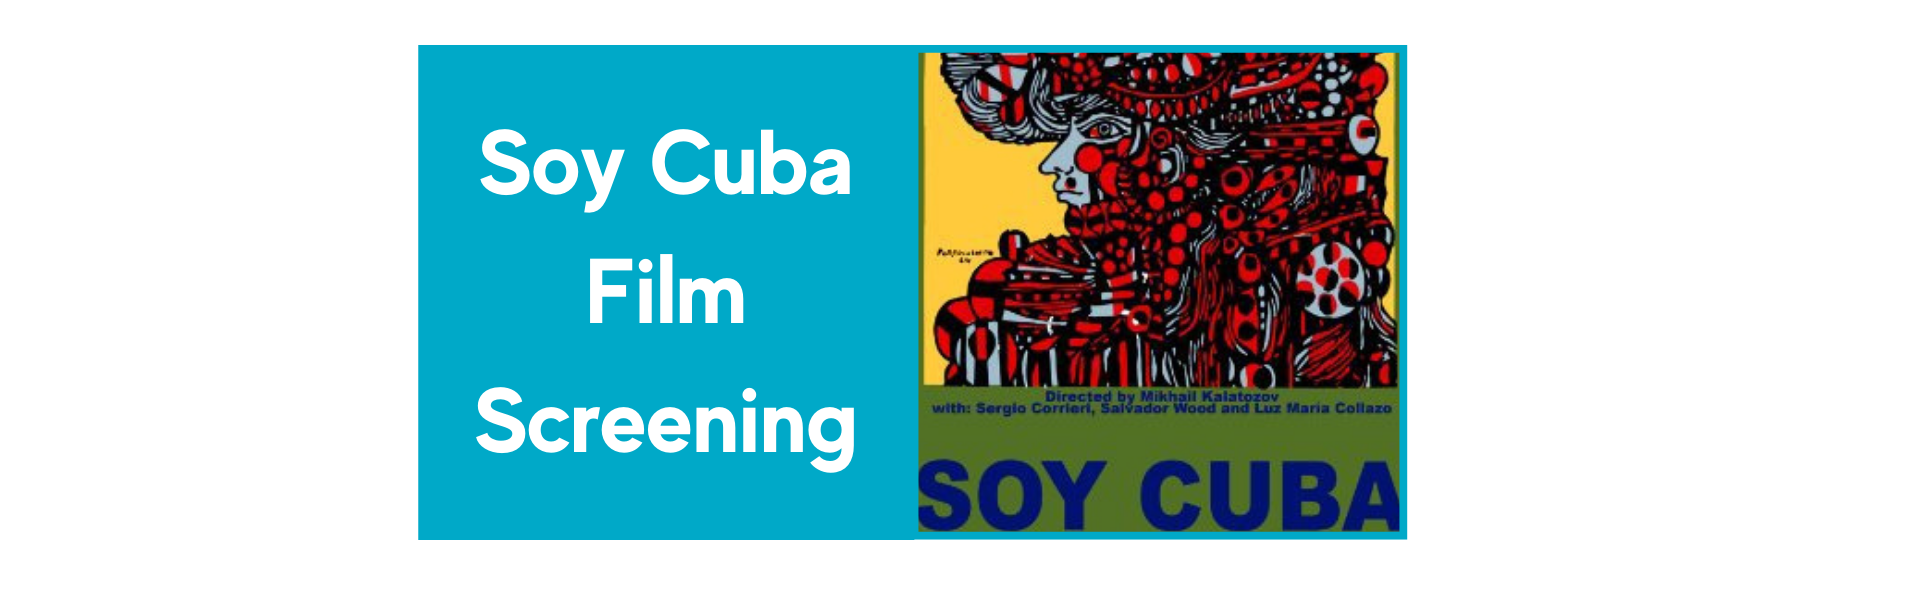 Soy-Cuba-Film-Screening.png